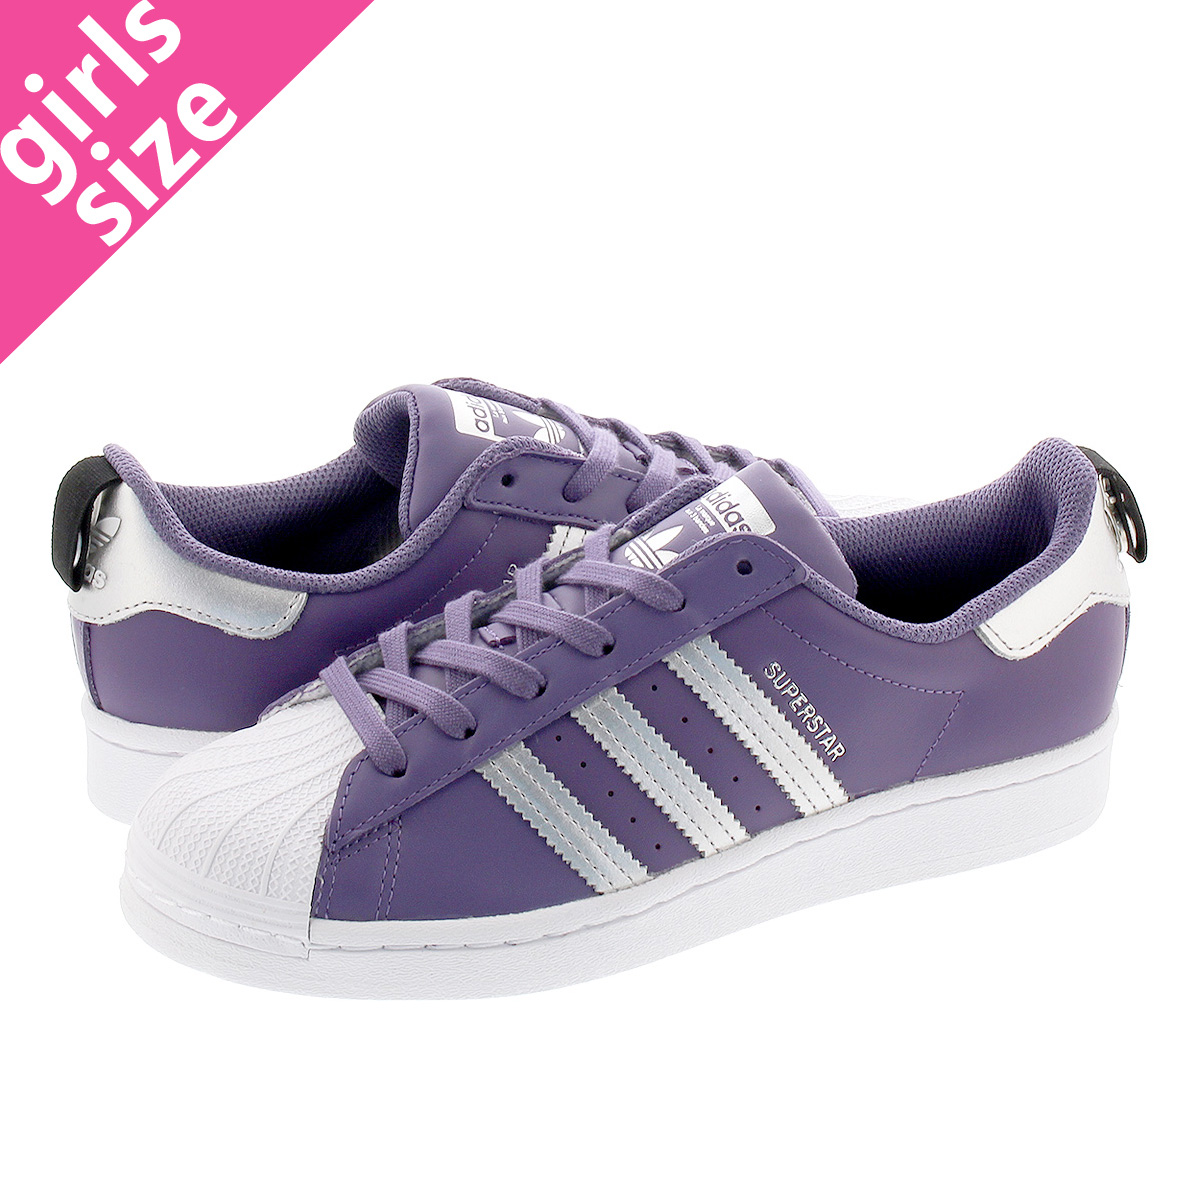 Buy > adidas purple superstar > in stock